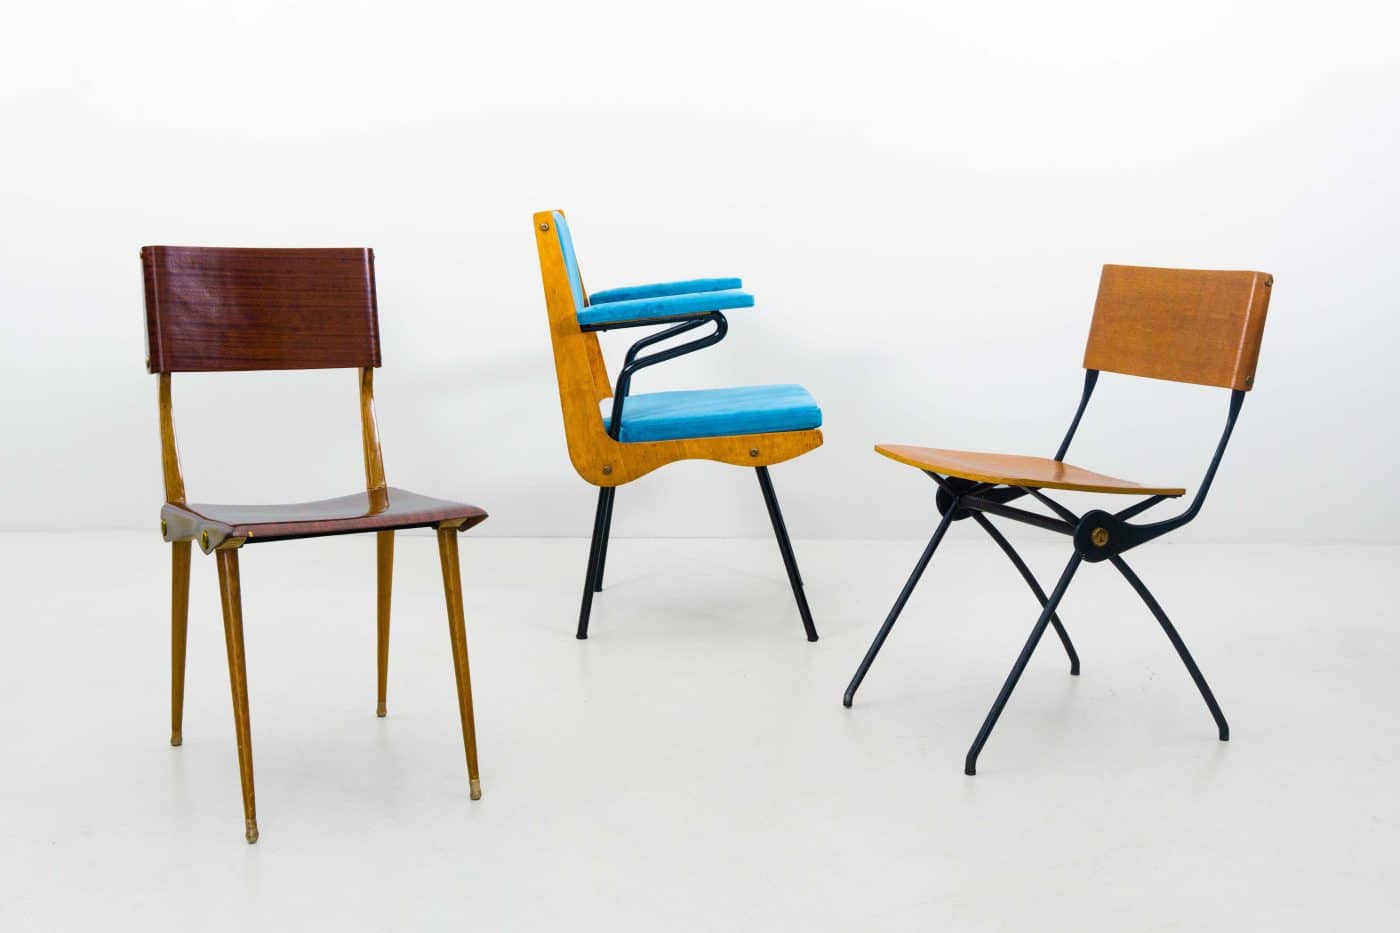 A trio of mid-century chairs by Carlo de Carli